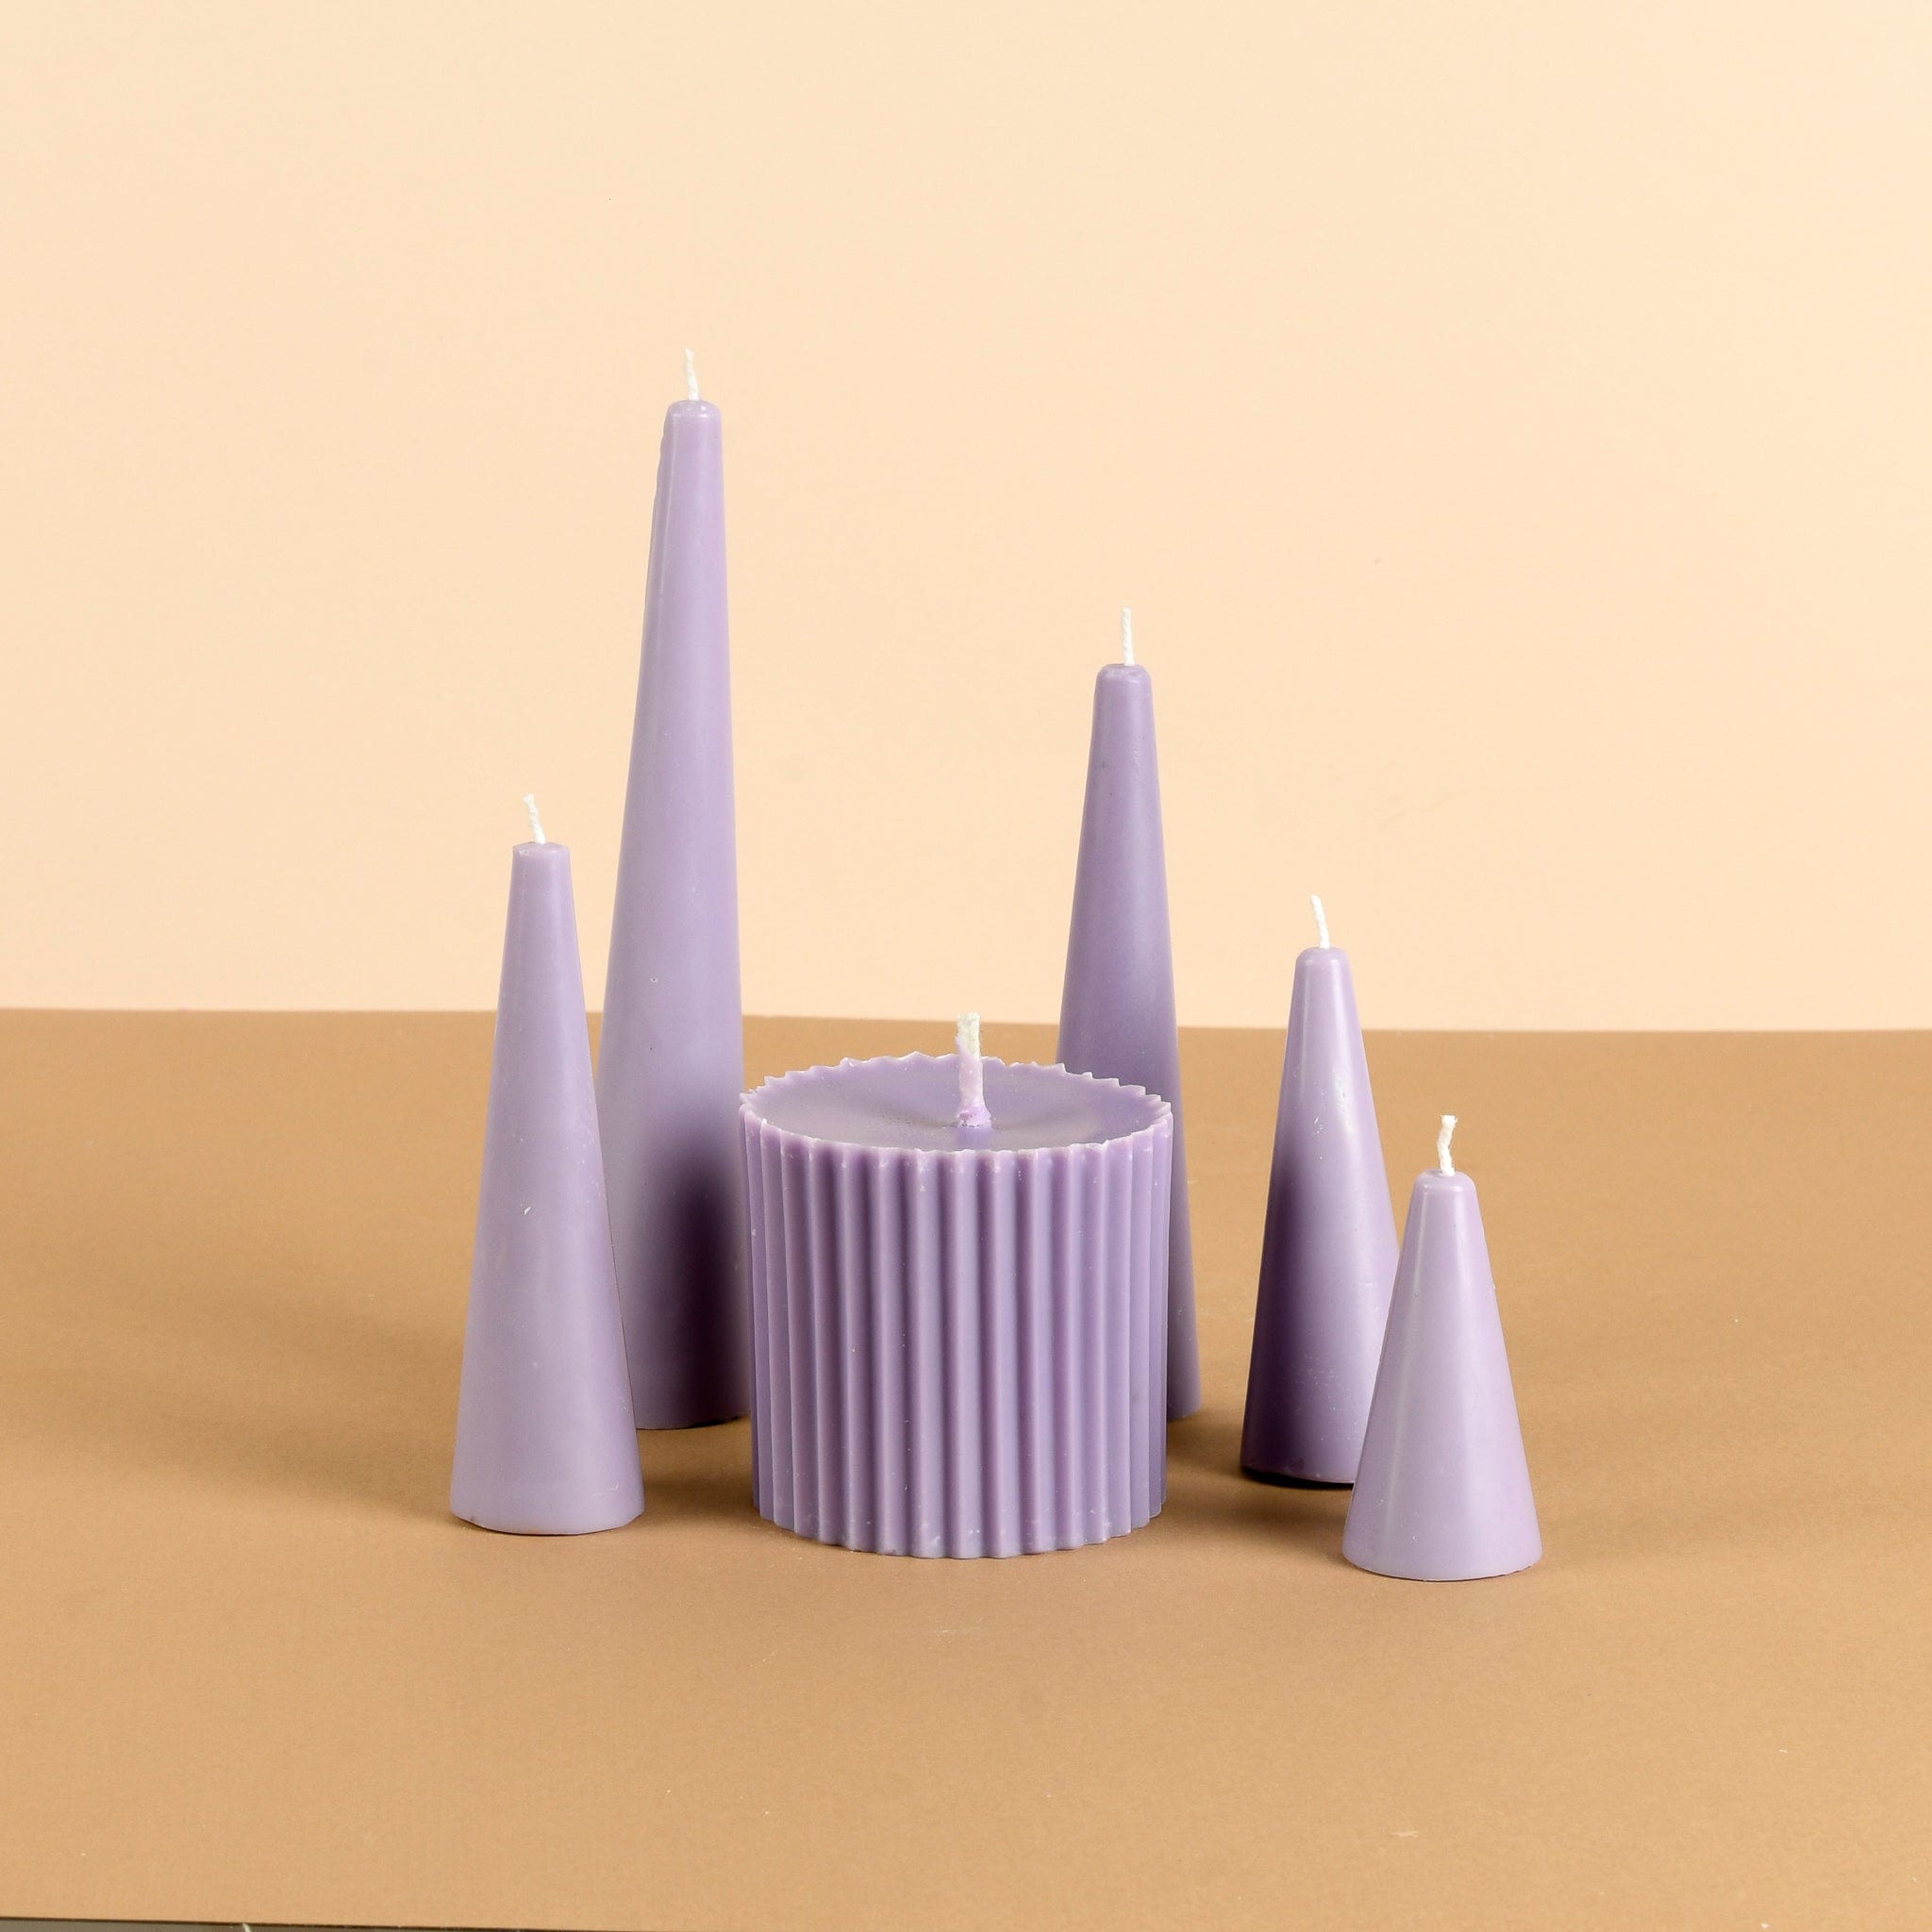 Infinity Set of 6 Forest Green Candles - Crème de la Shea Scented